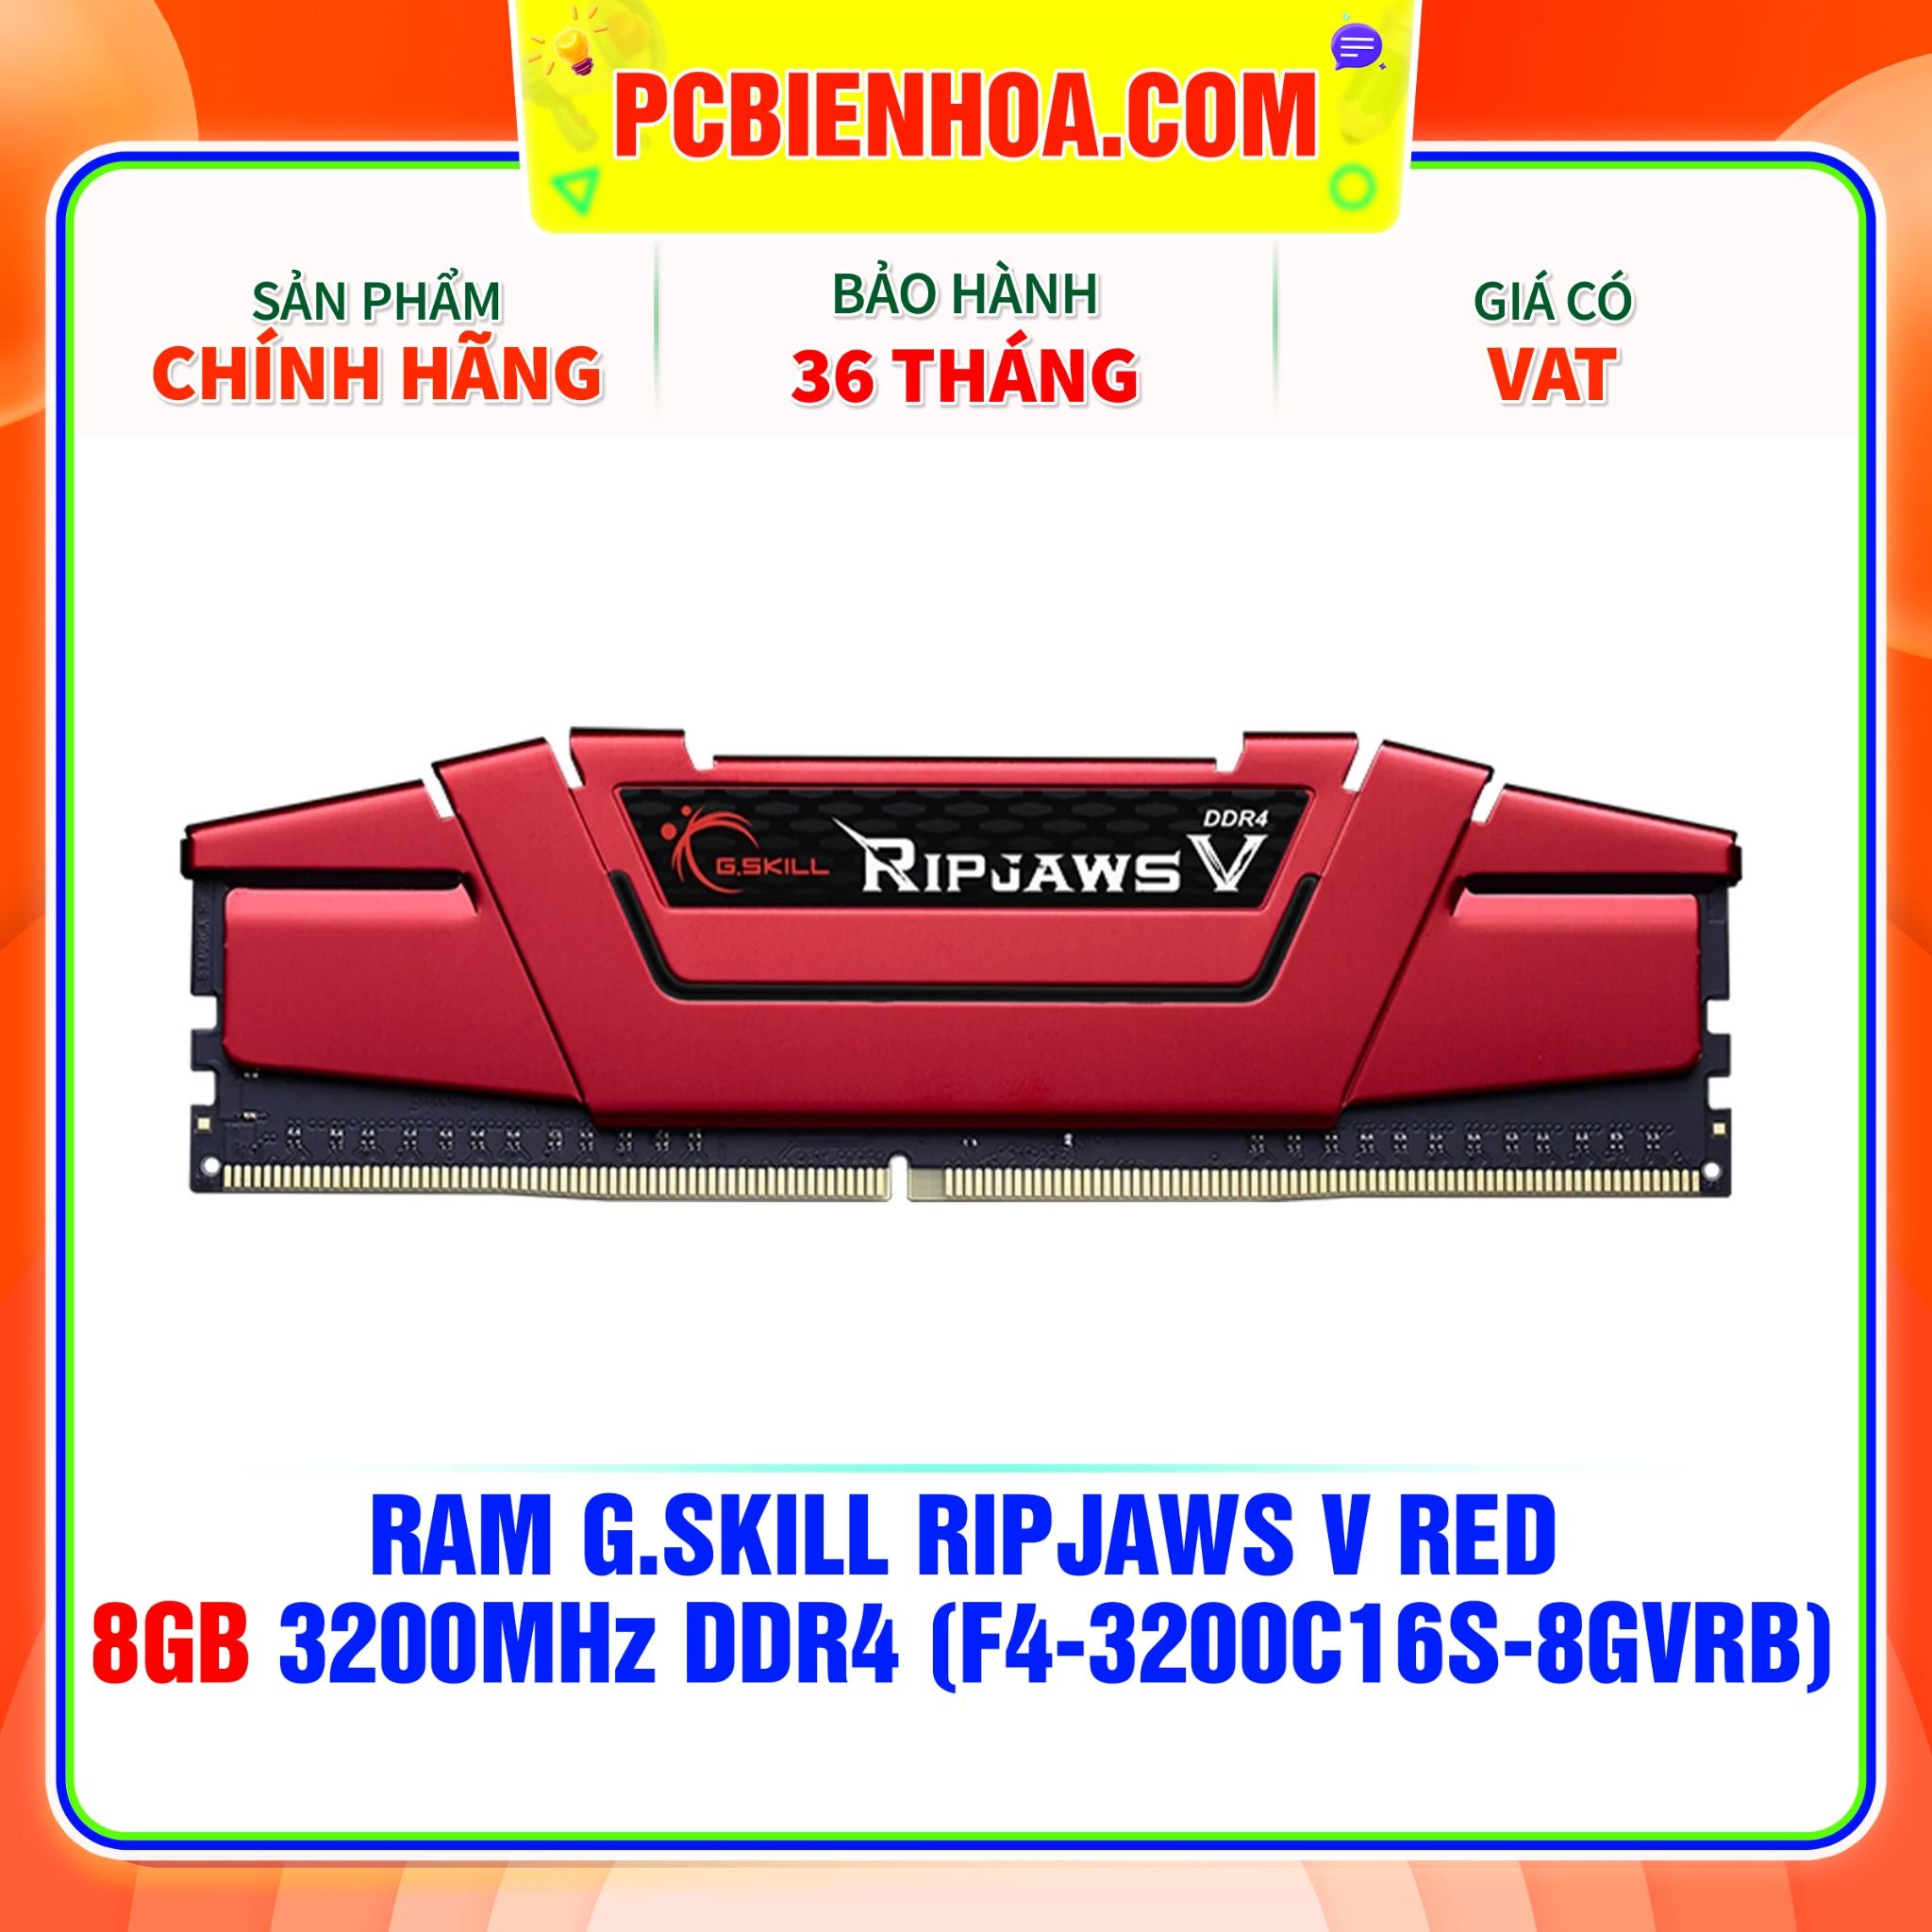  RAM G.SKILL RIPJAWS V RED 8GB 3200MHz DDR4 ( F4-3200C16S-8GVRB ) 